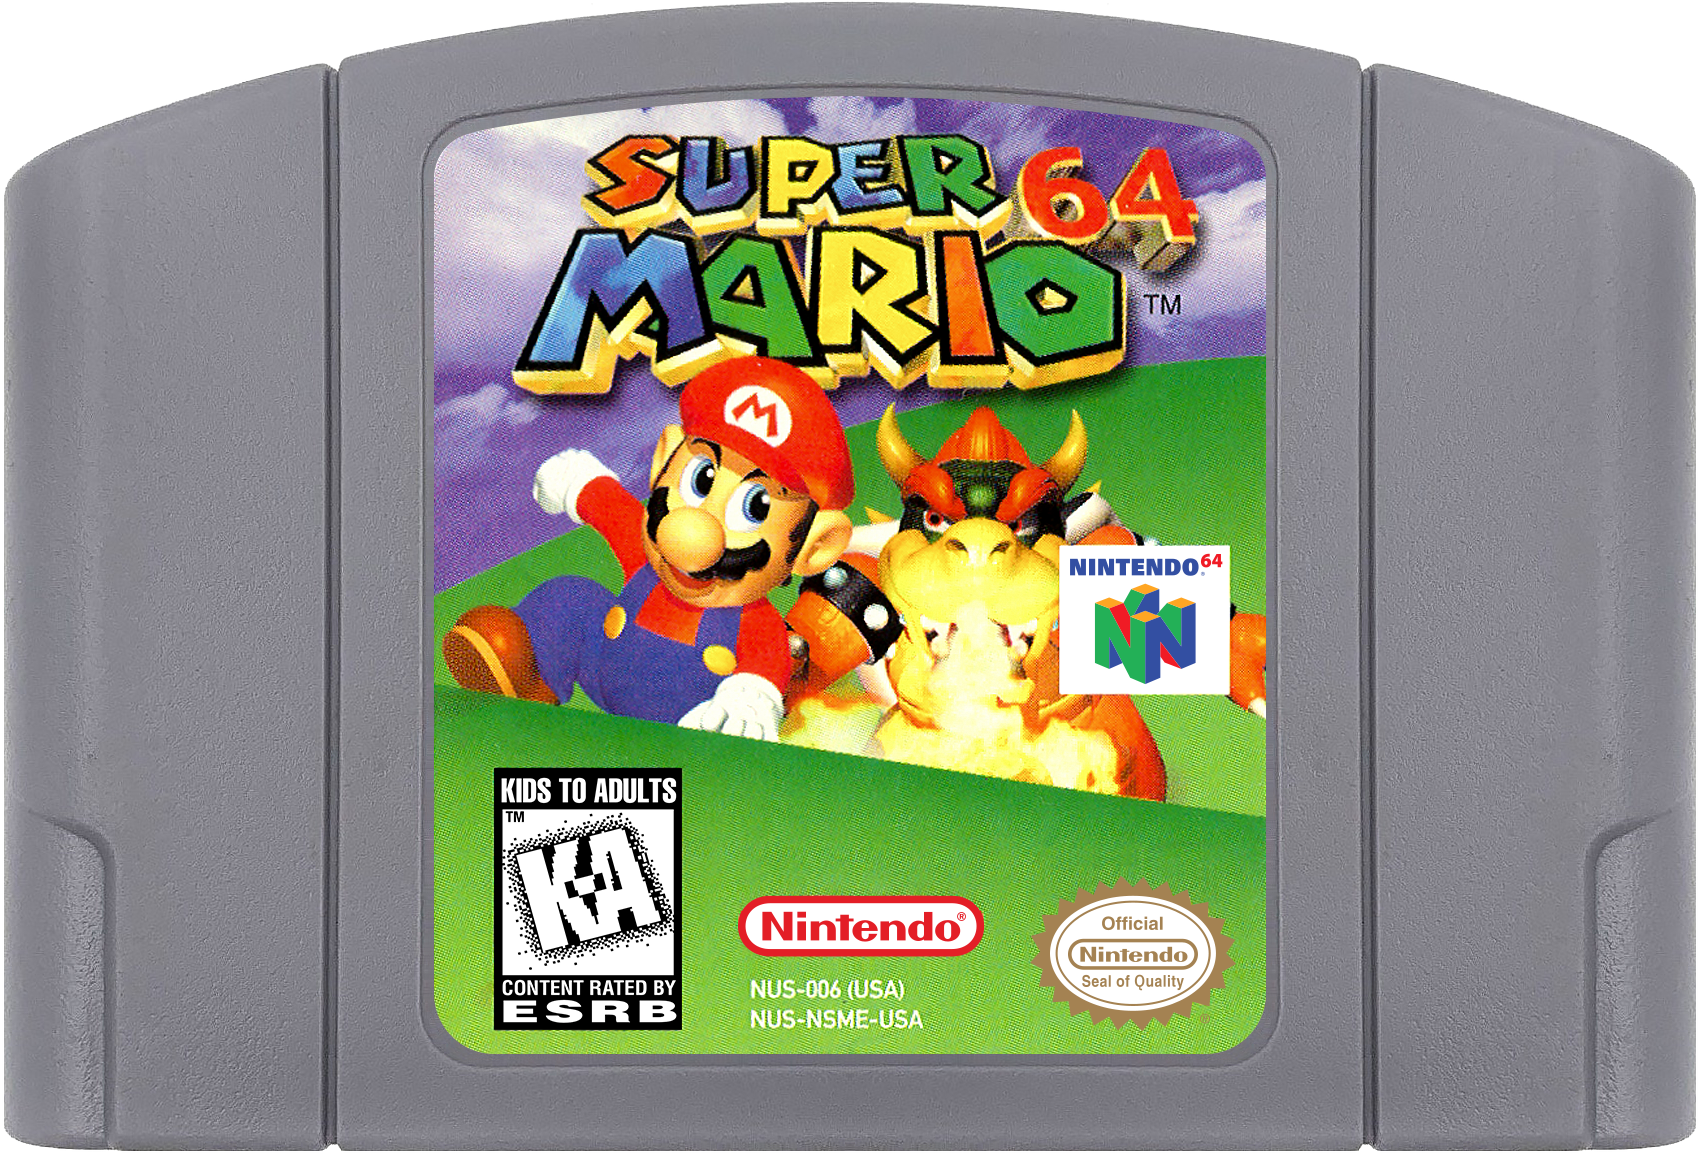 Картридж Нинтендо 64. Nintendo 64 Cartridge. Super Mario 64 Nintendo 64. Mario 64 Nintendo 64 Cartridge.